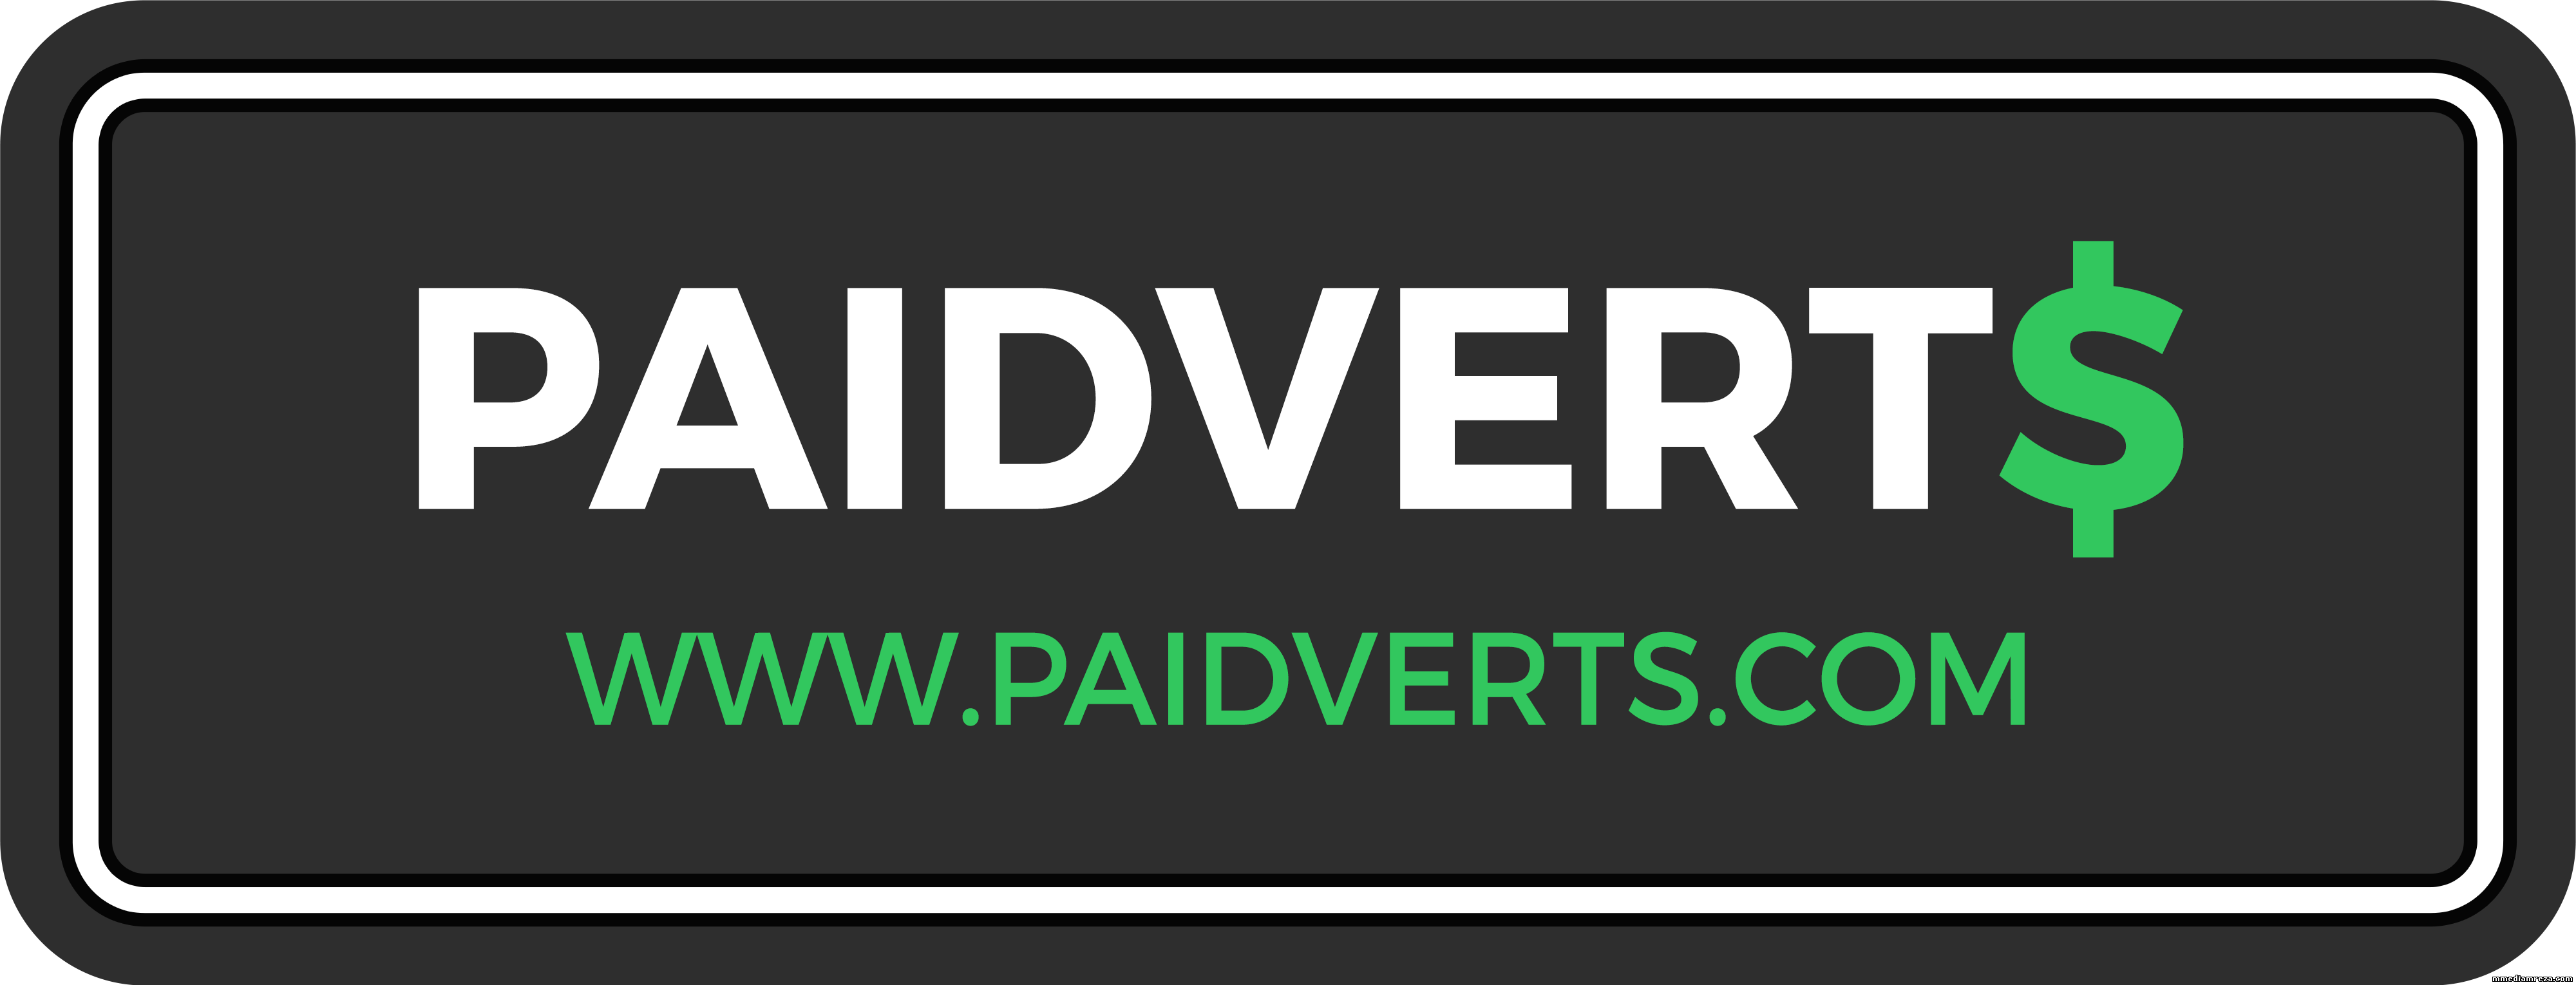 PaidVerts - Odlicno za pocetnike